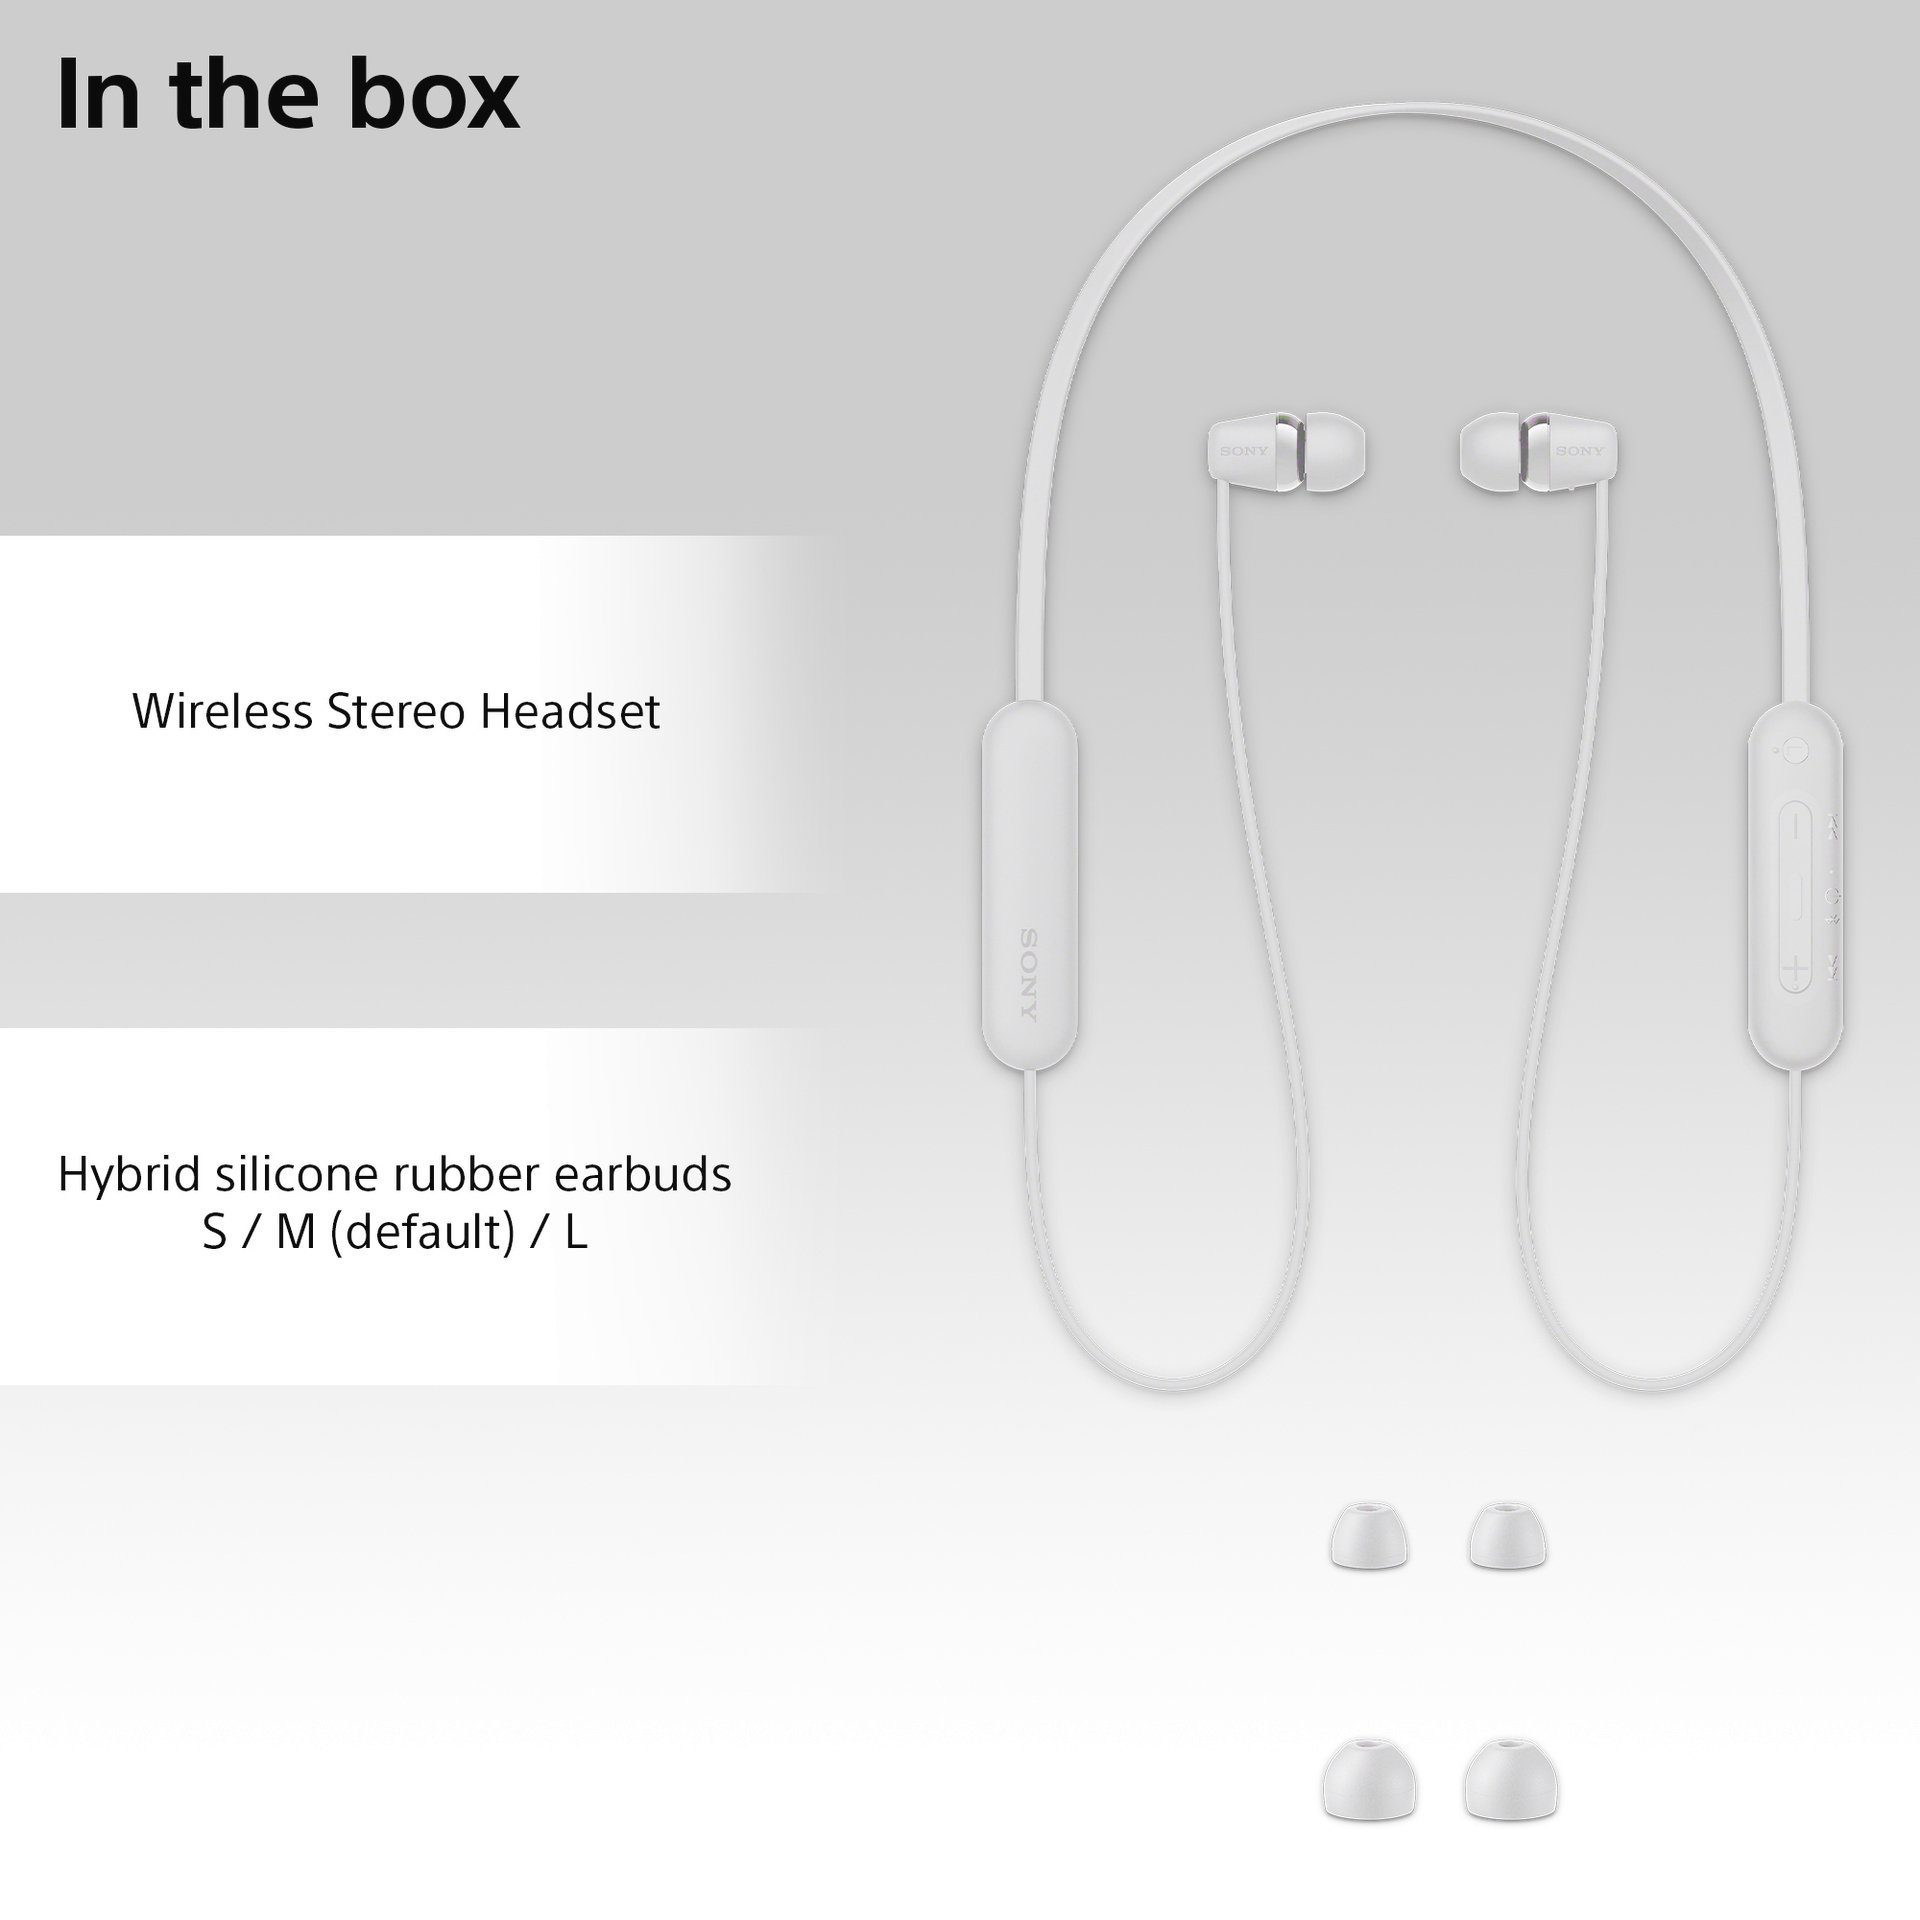 Sony Kopfhörer weiß WI-C100 In-Ear (Sprachsteuerung) In-Ear-Kopfhörer